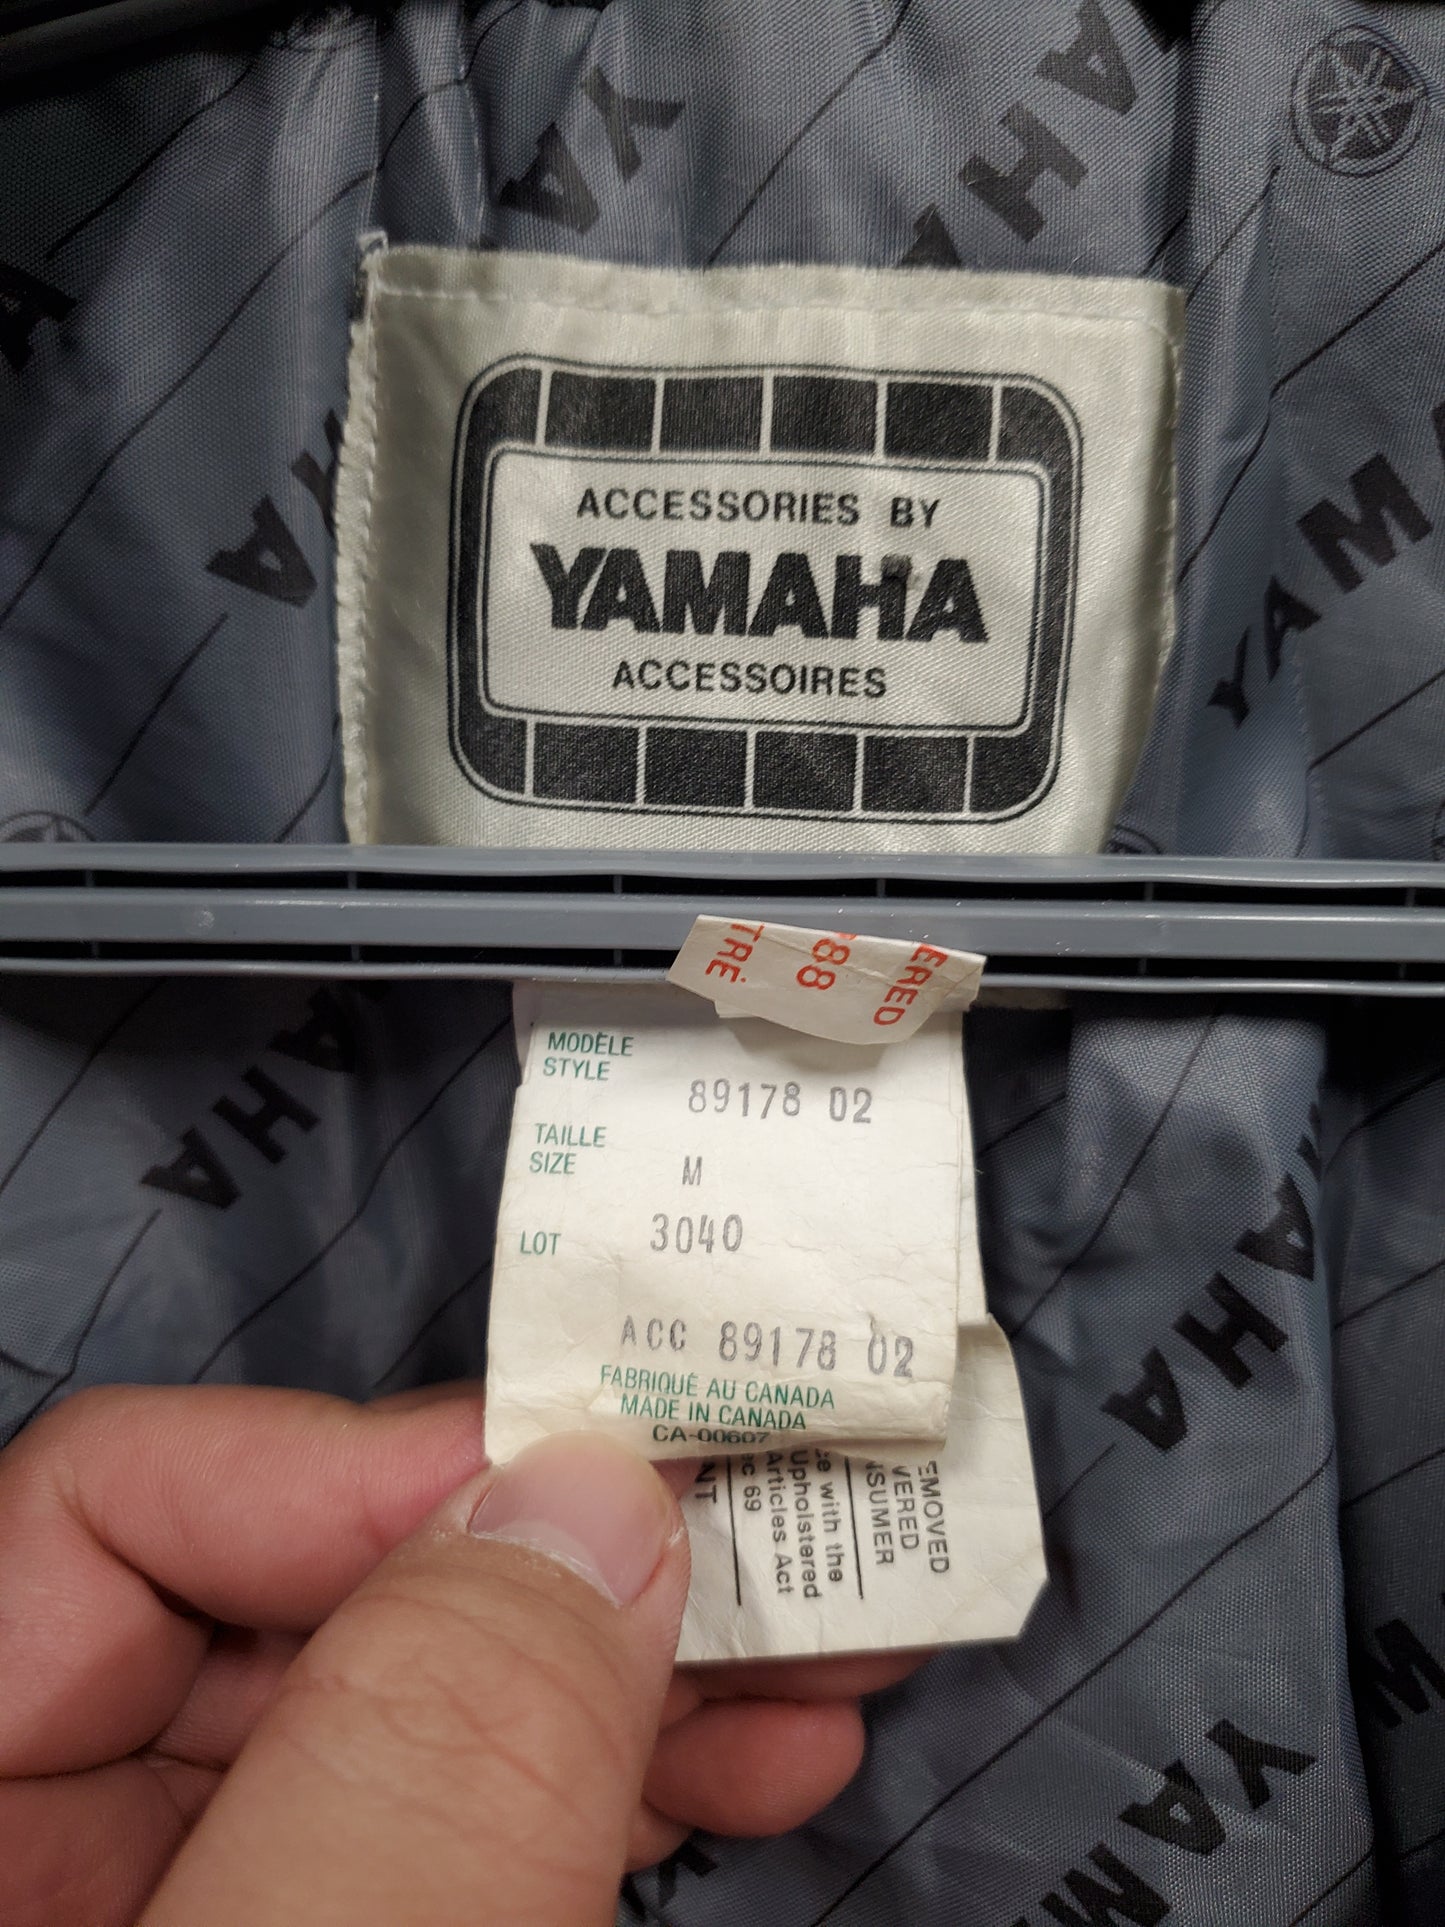 Mens Yamaha Racing Jacket Size Medium